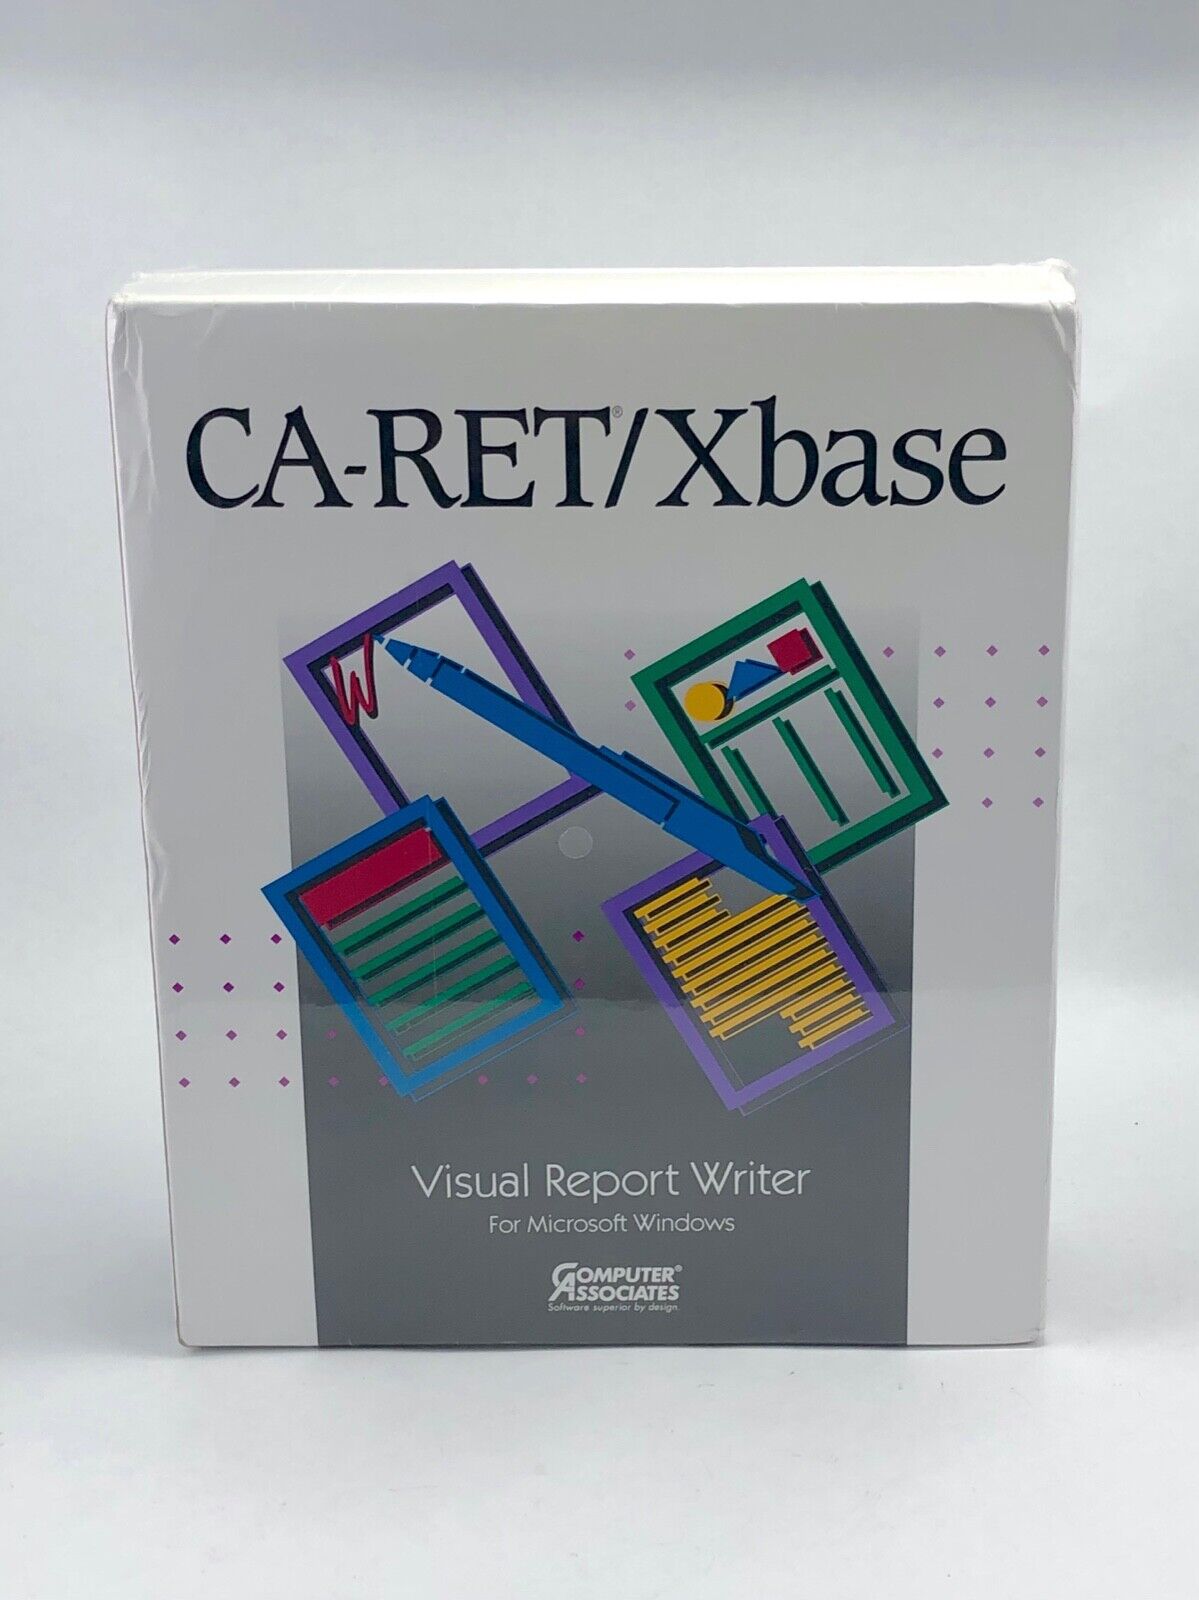 Rare NIB Computer Associates CA-RET/Xbase Visual Report Writer Microsoft Windows